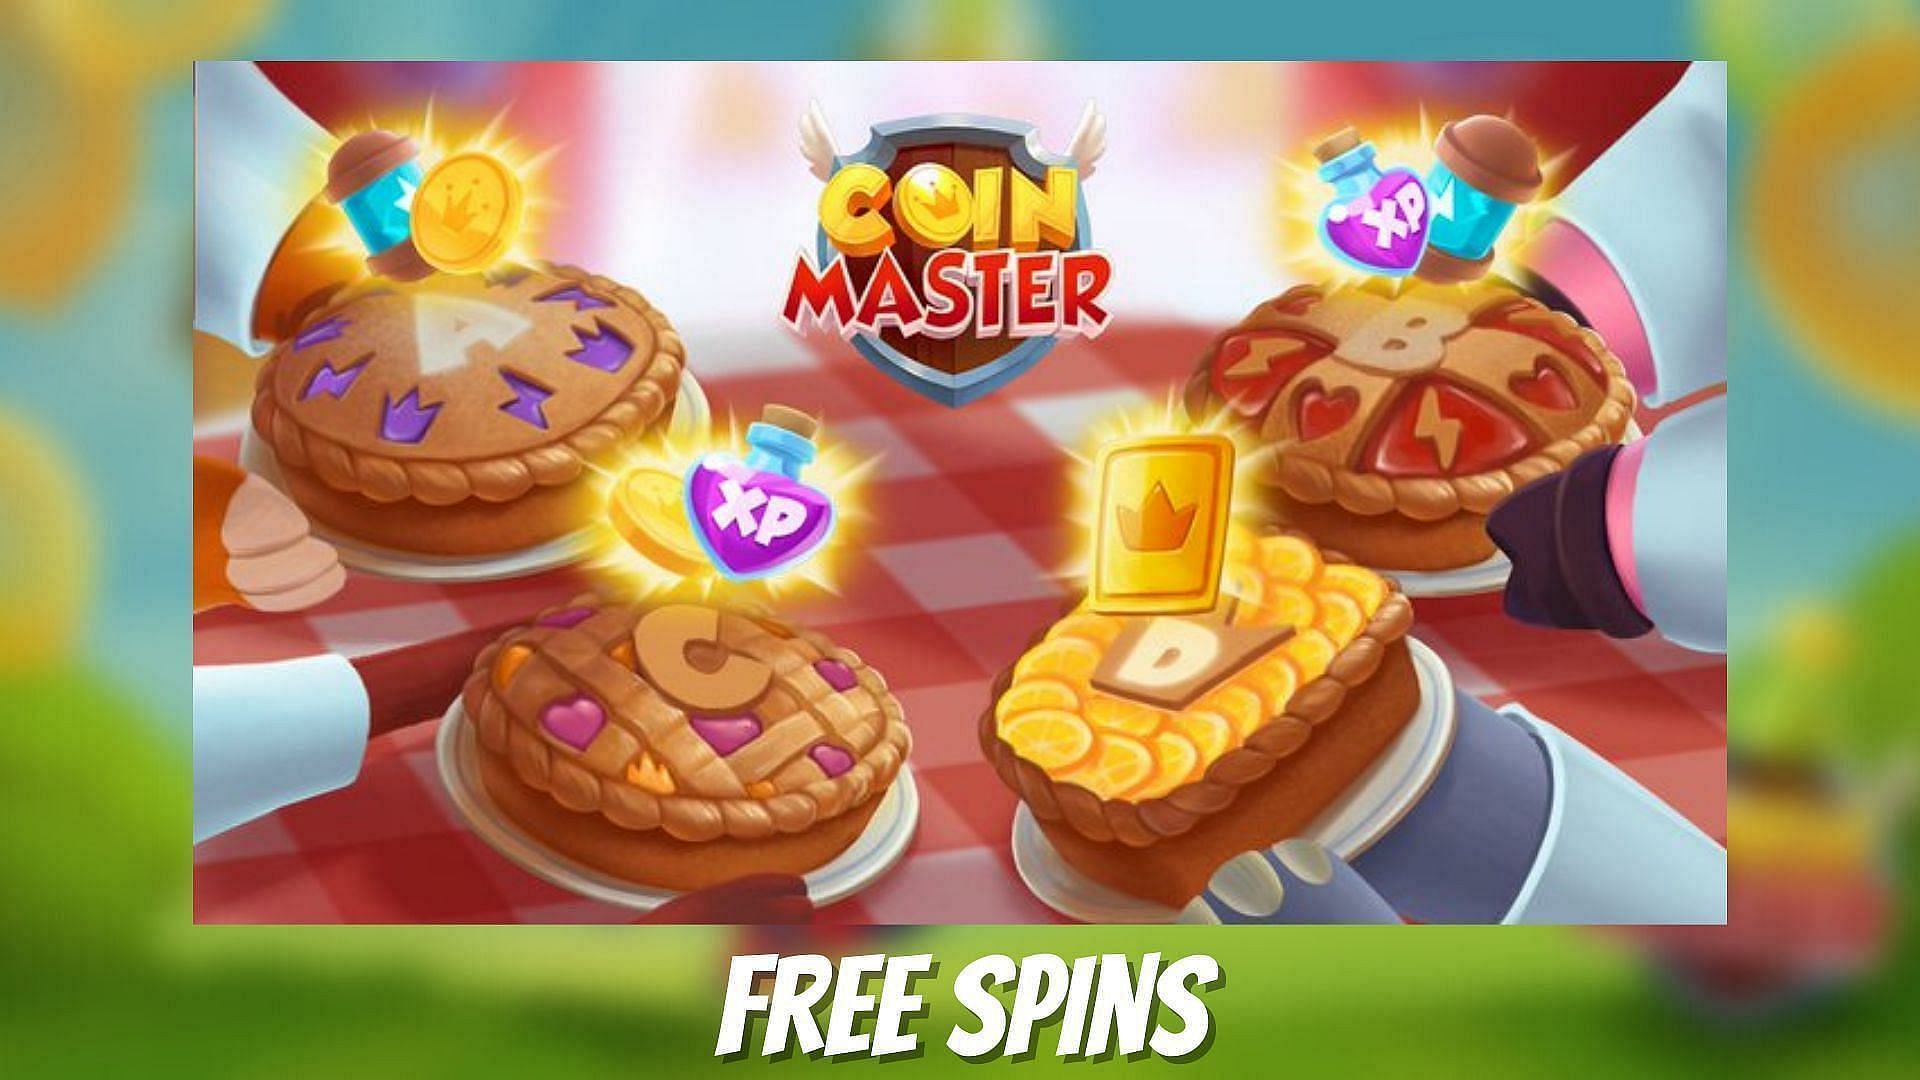 Obtain free spins in Coin Master (Image via Sportskeeda)